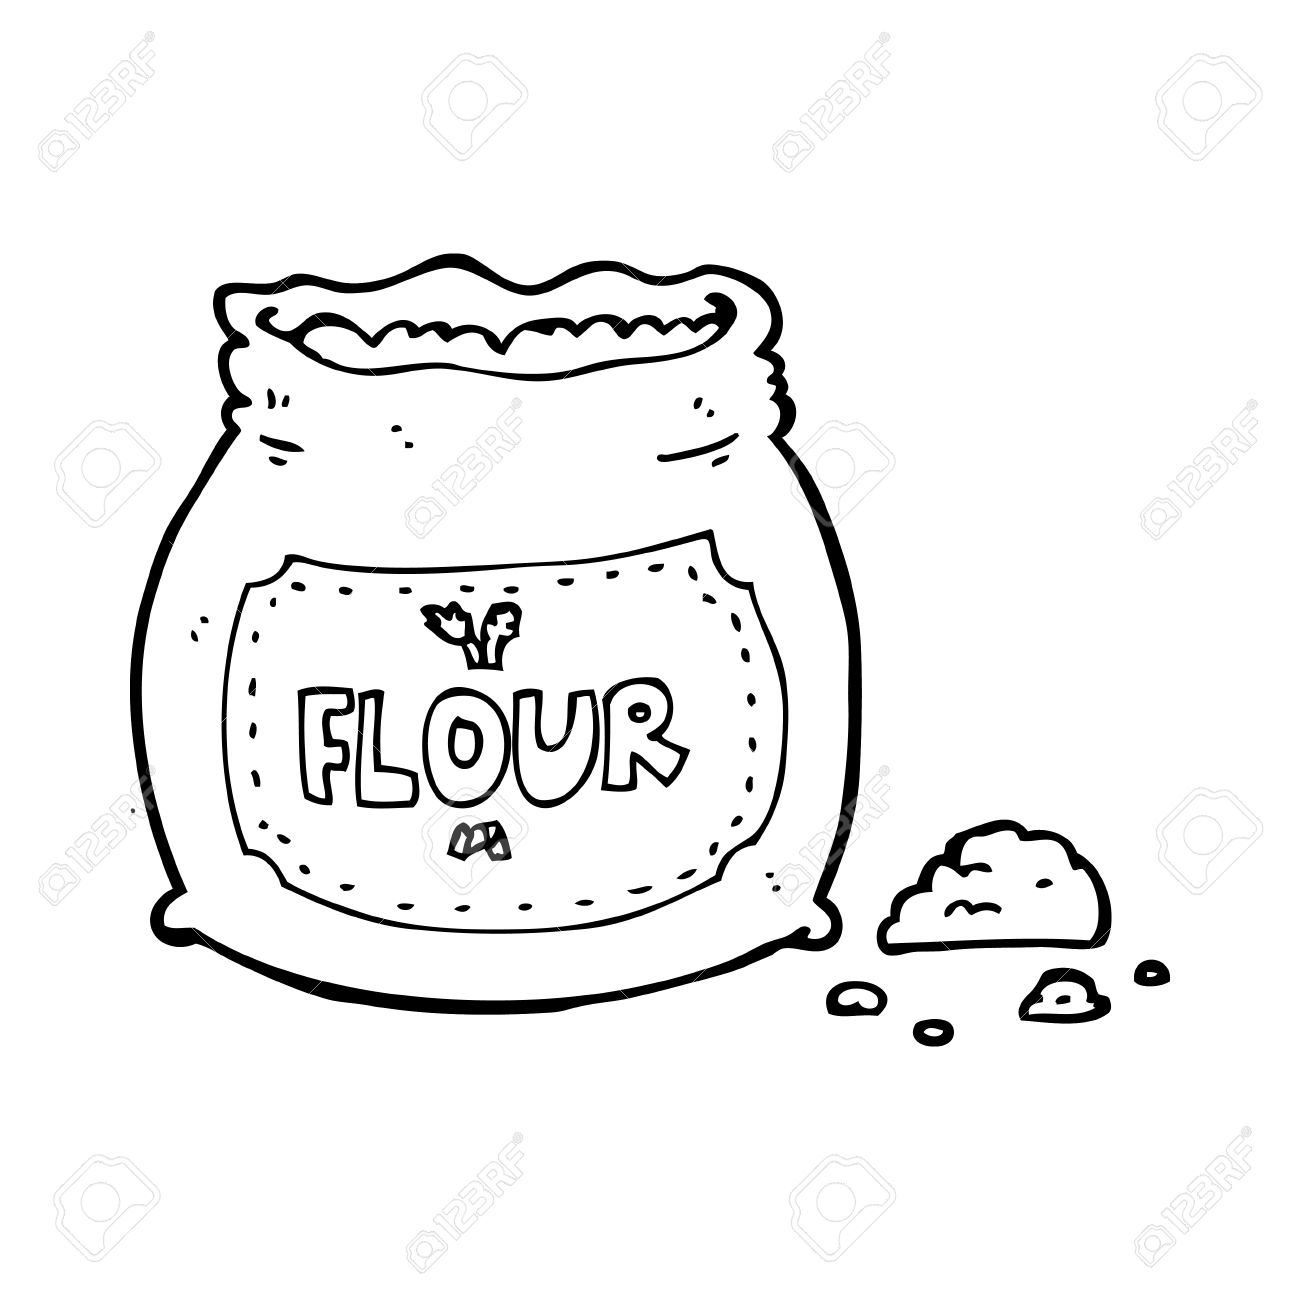 Flour clipart bag flour #6